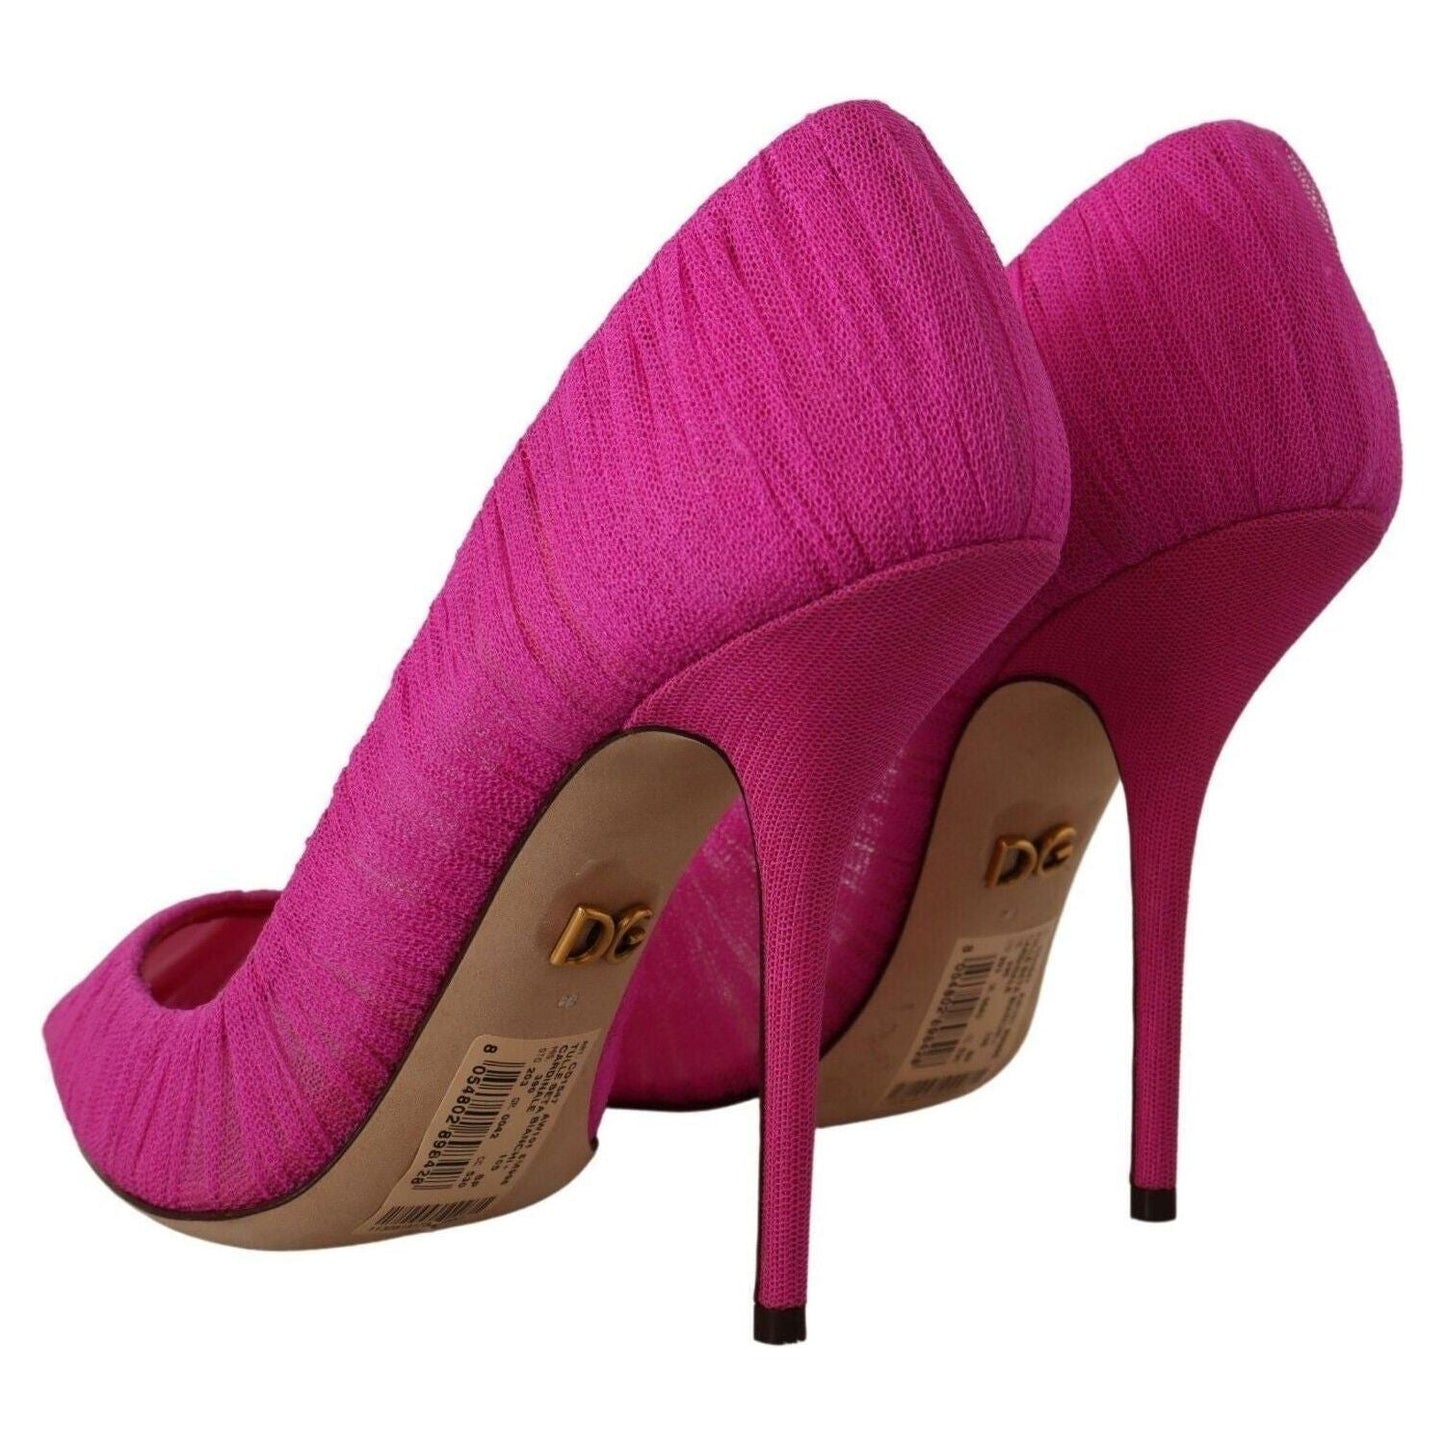 Dolce & Gabbana Elegant Pink Tulle Mesh Heels Pumps pink-tulle-stiletto-high-heels-pumps-shoes s-l1600-3-116-248be66d-12c.jpg